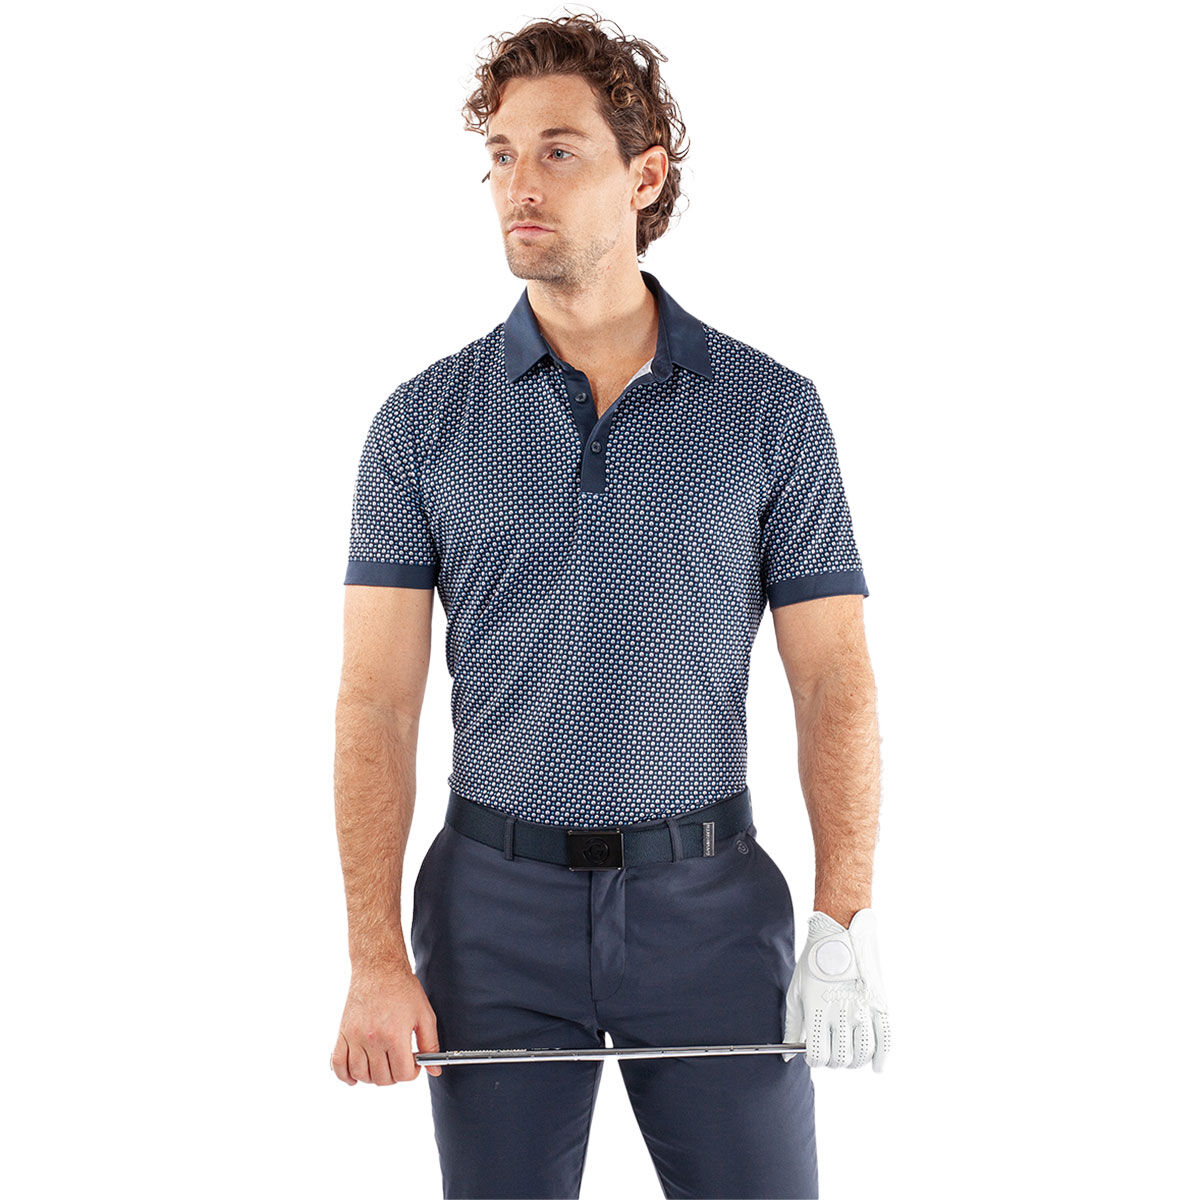 Galvin Green Men’s Mate Golf Polo Shirt, Mens, Cool grey/navy, Xxl | American Golf